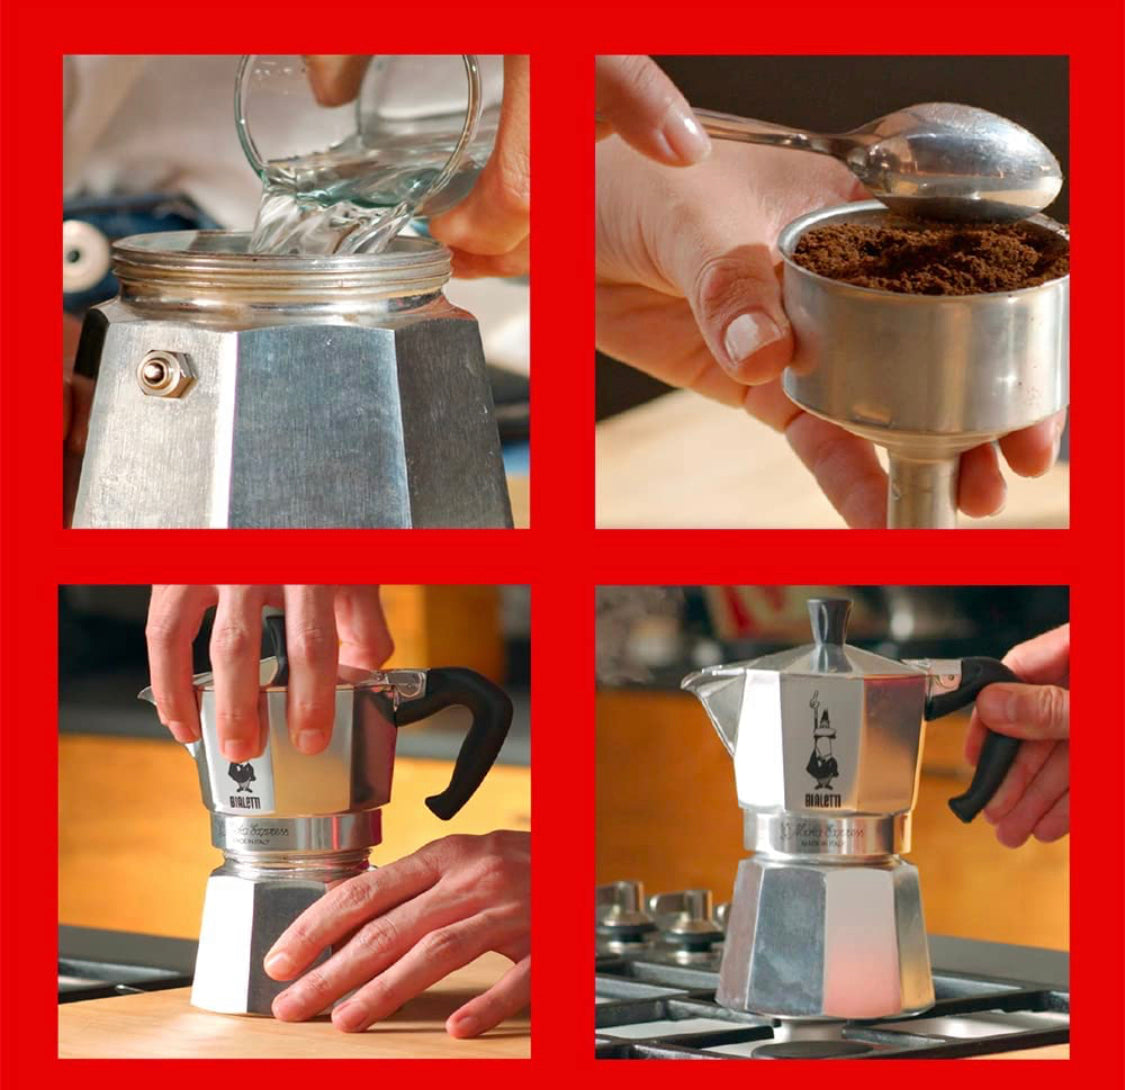 Bialetti Moka Express Stovetop Espresso Maker